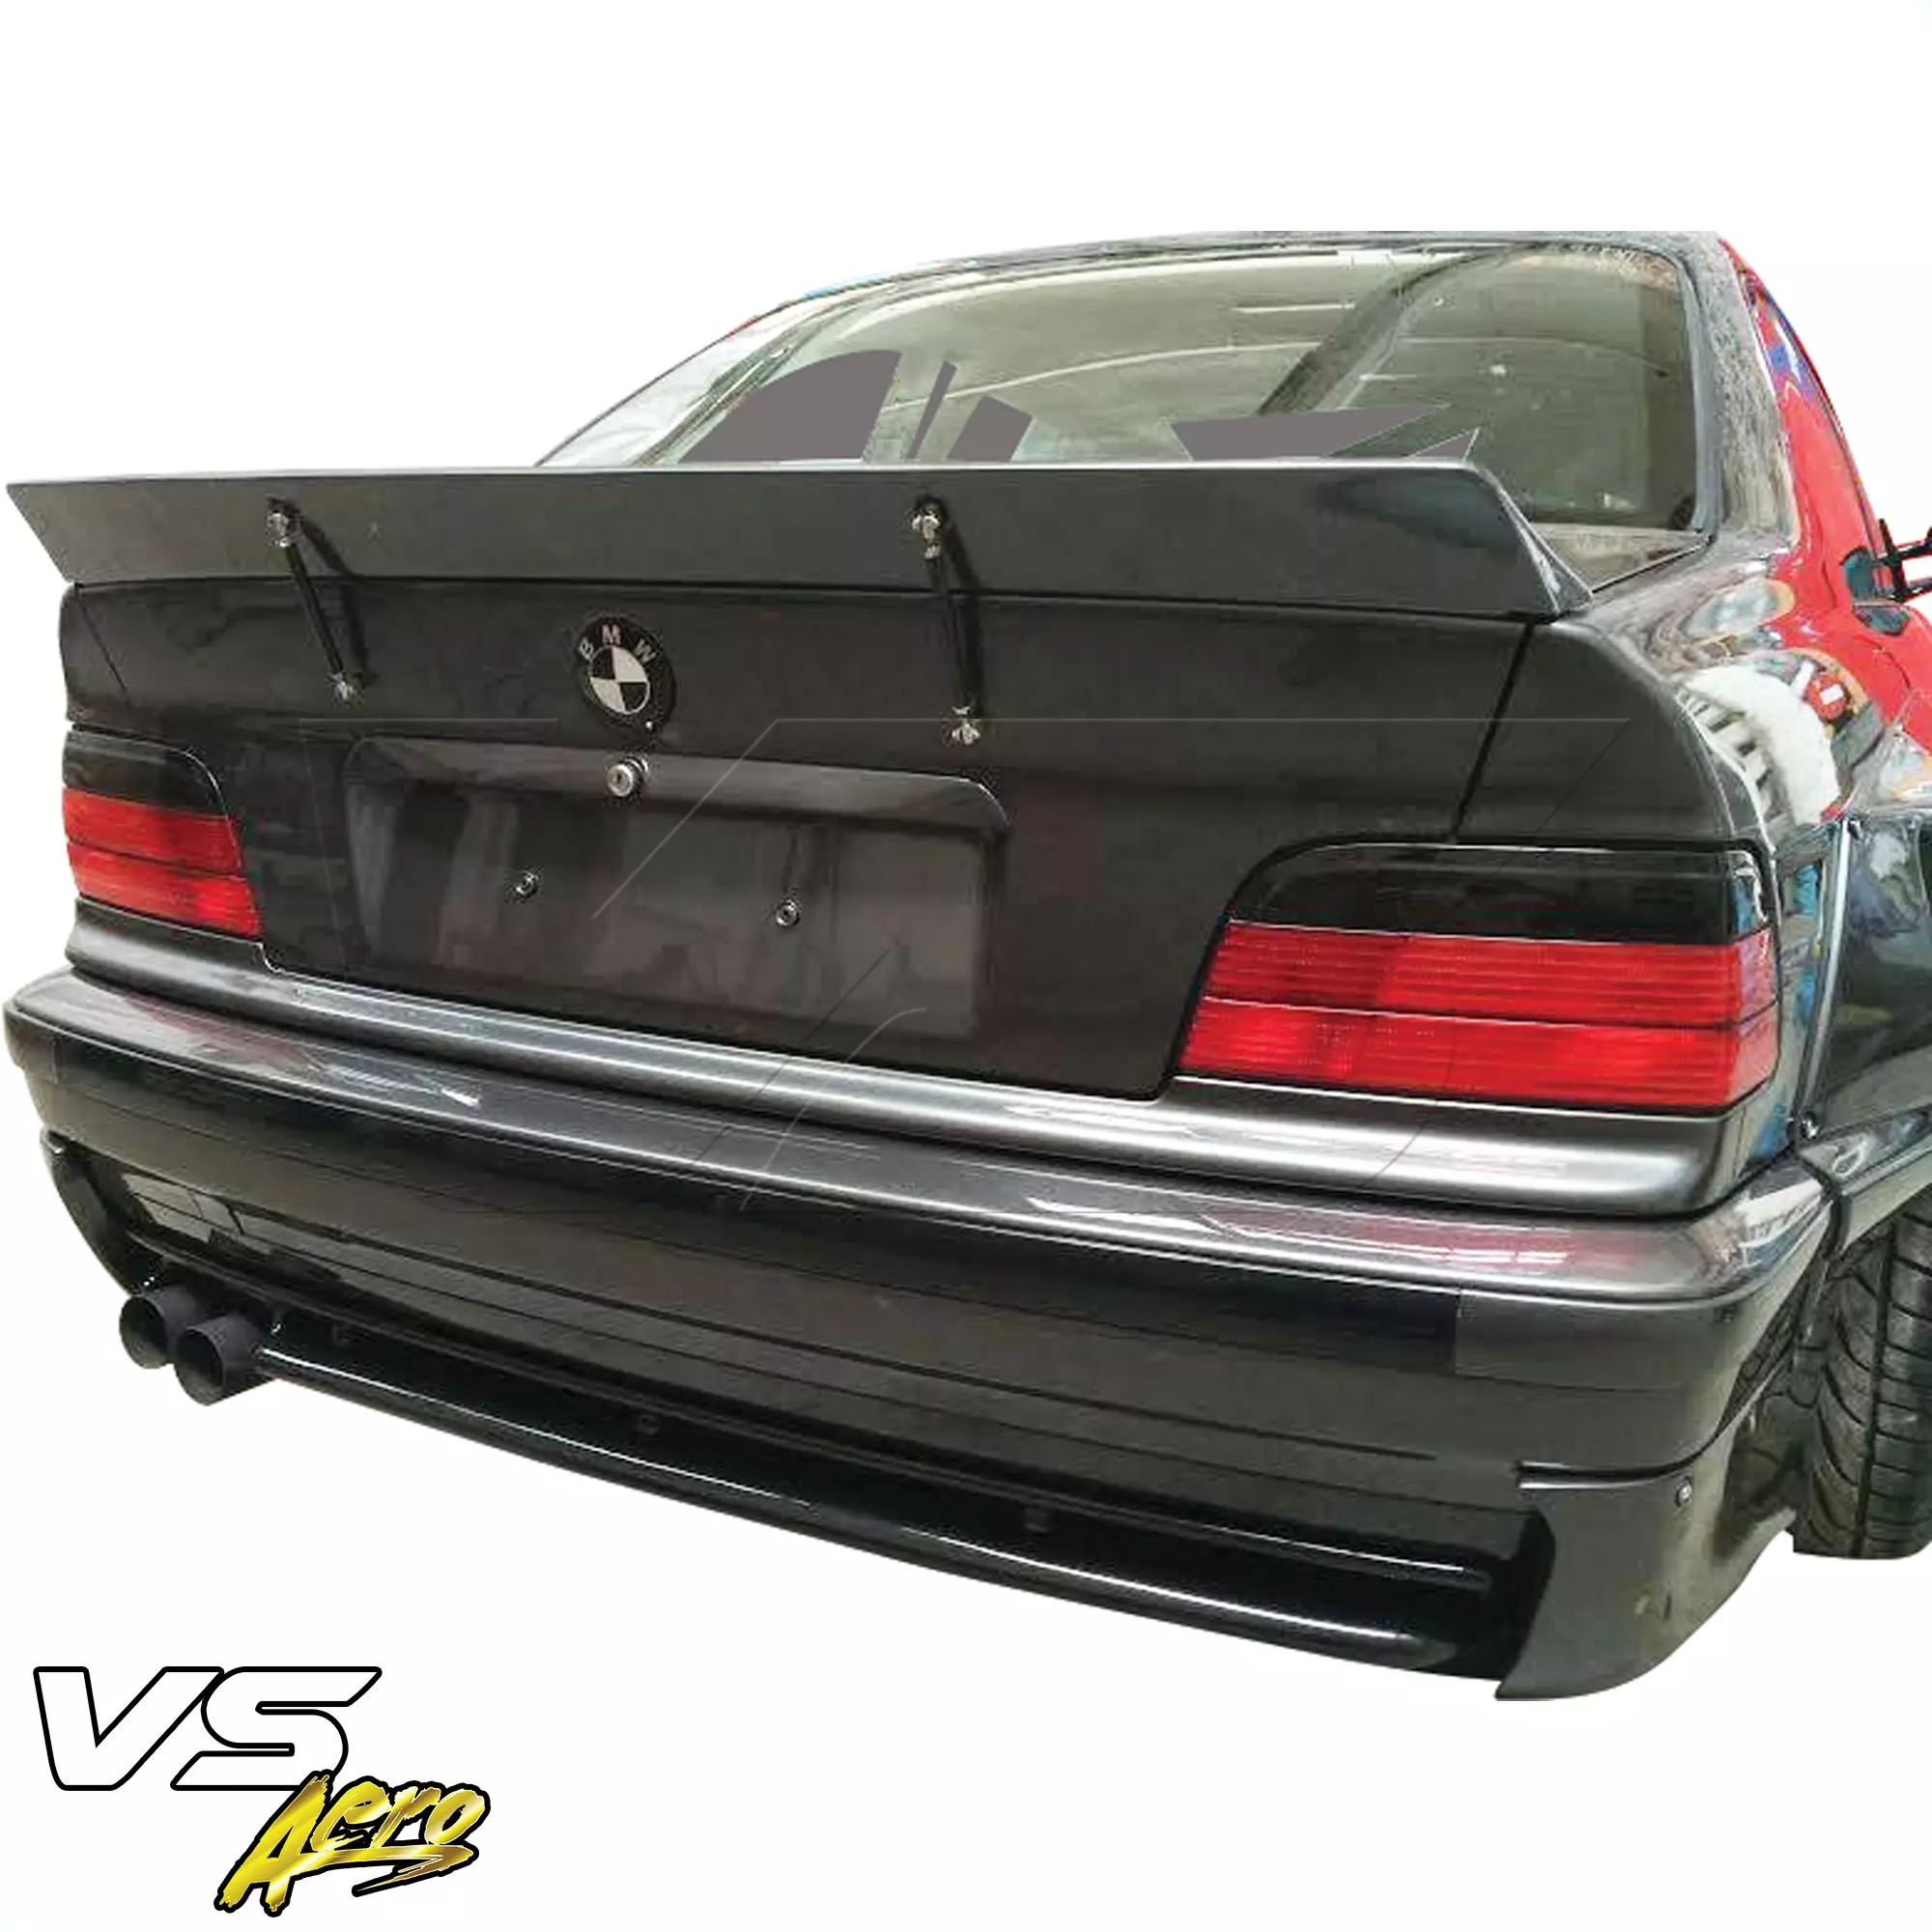 VSaero FRP TKYO Spoiler Wing > BMW 3-Series 325i 328i E36 1992-1998 > 2dr Coupe - Image 23